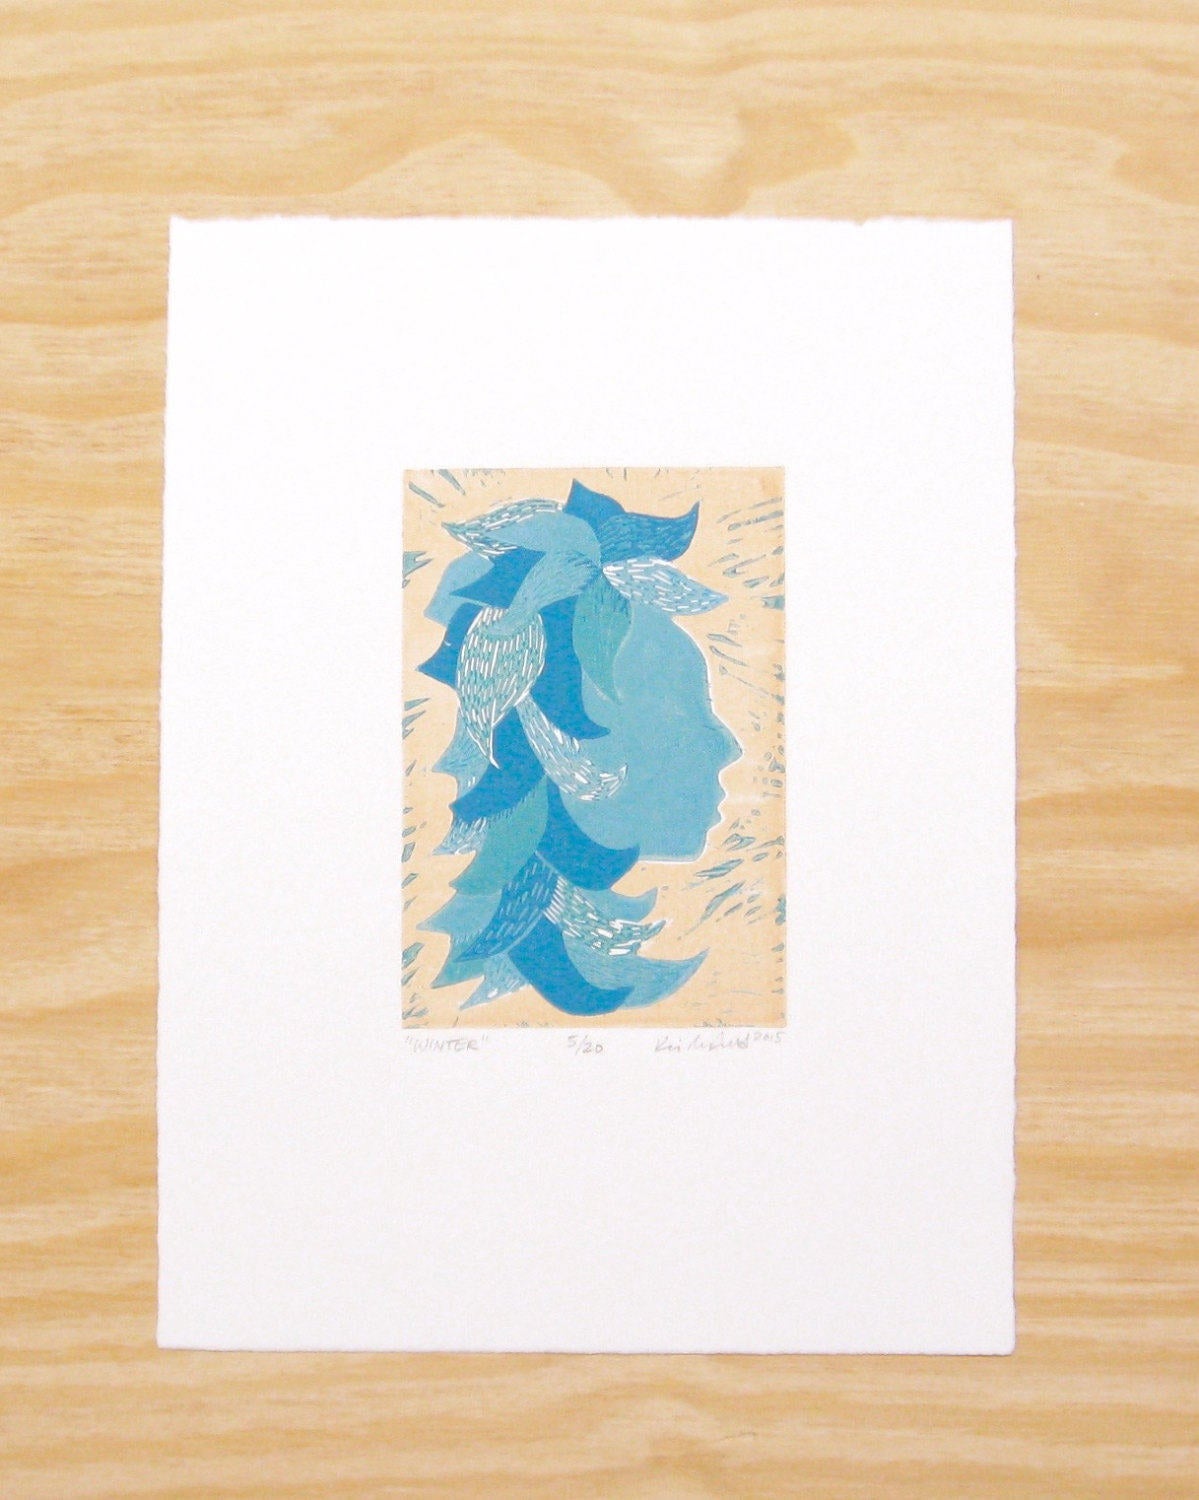 Winter woman- reduction woodblock print (9x12”)